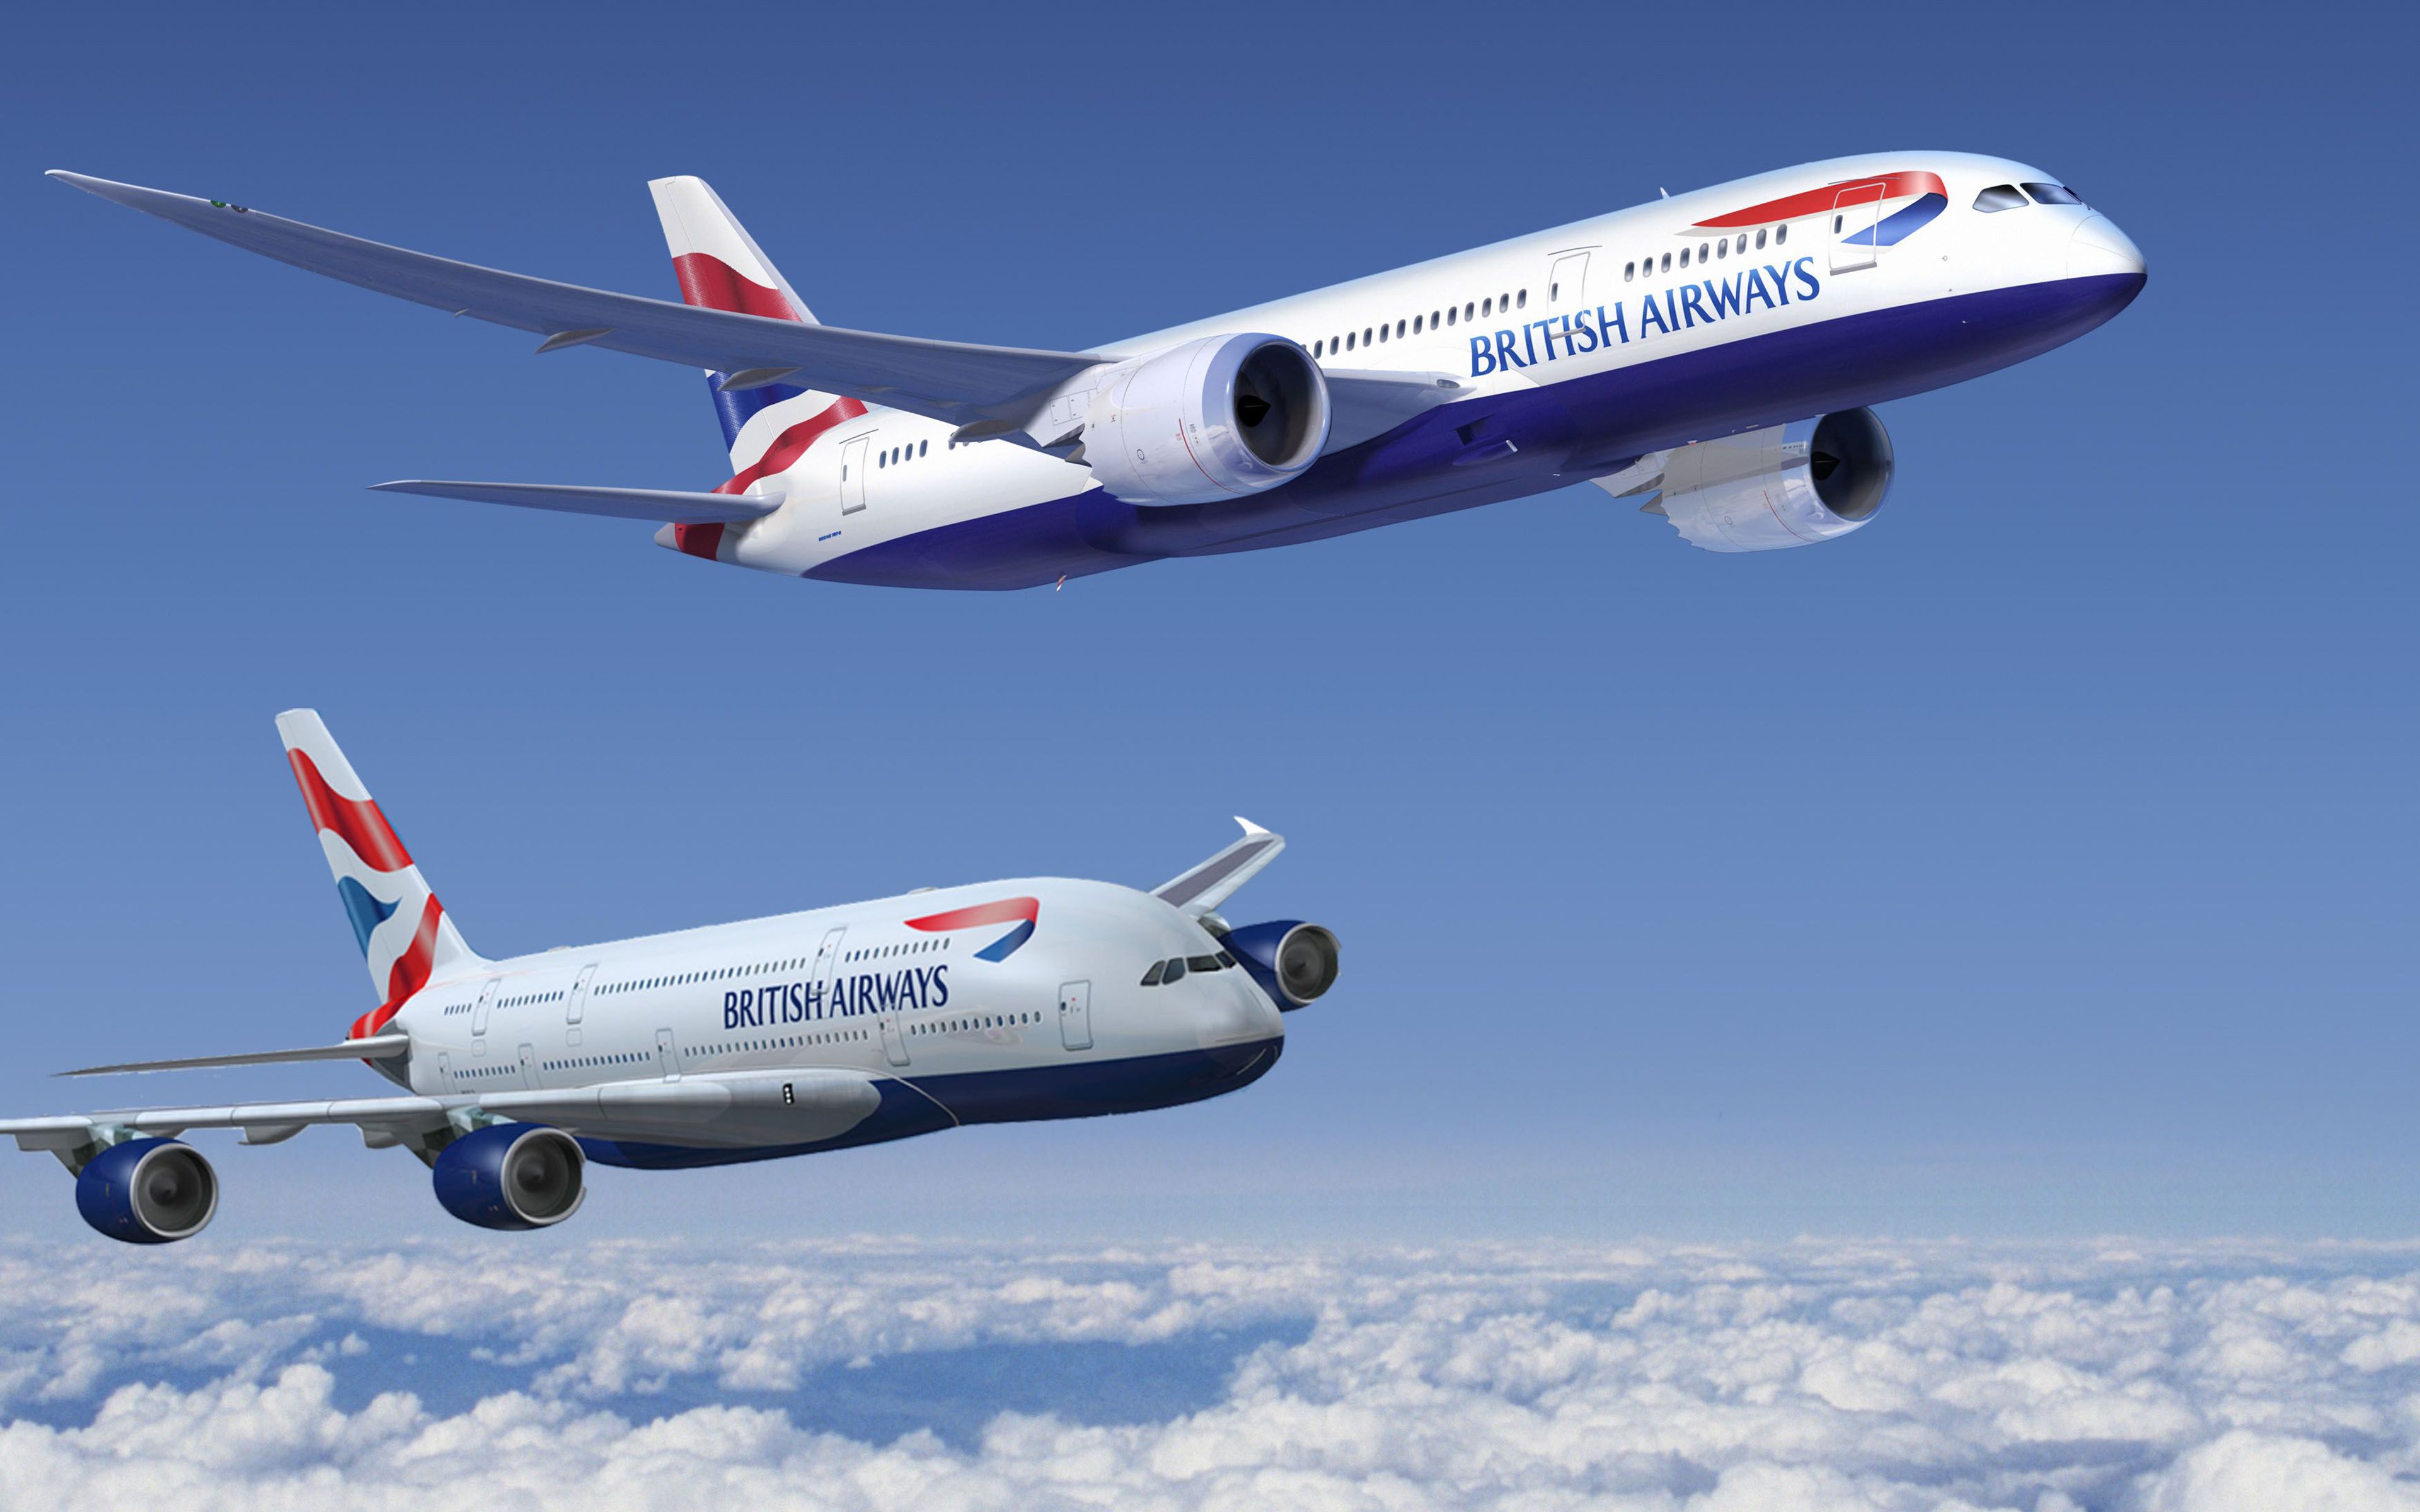 Download wallpaper 4k, Airbus A British Airways, two planes